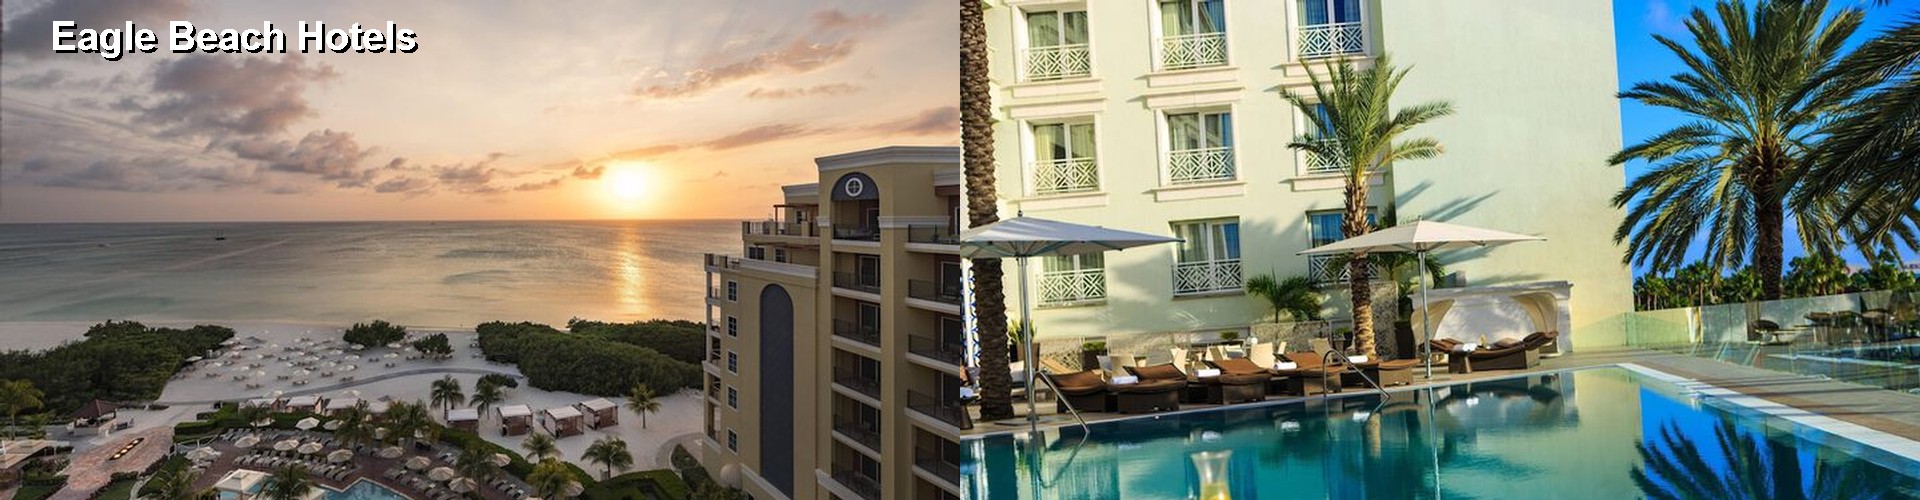 5 Best Hotels near Eagle Beach